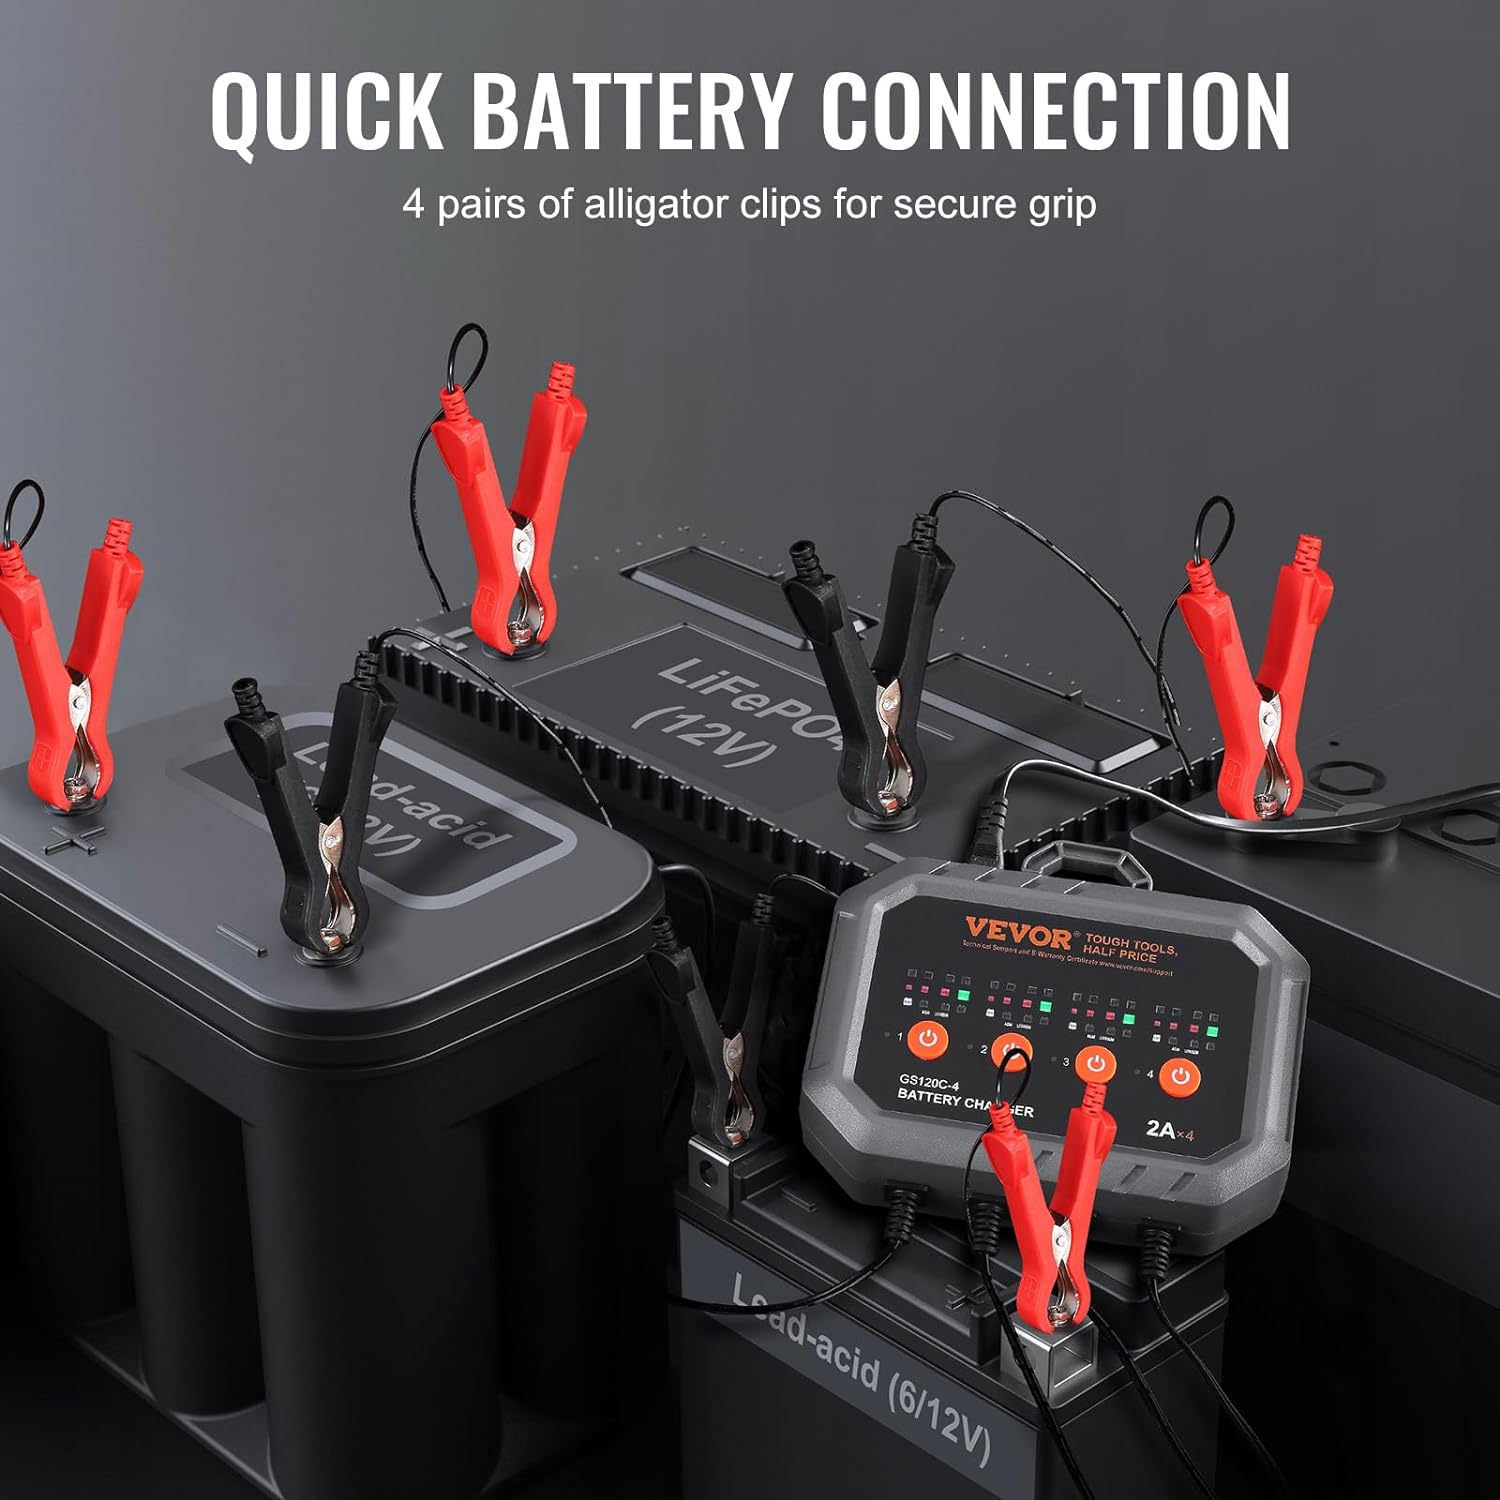 VEVOR Smart Battery Charger Review